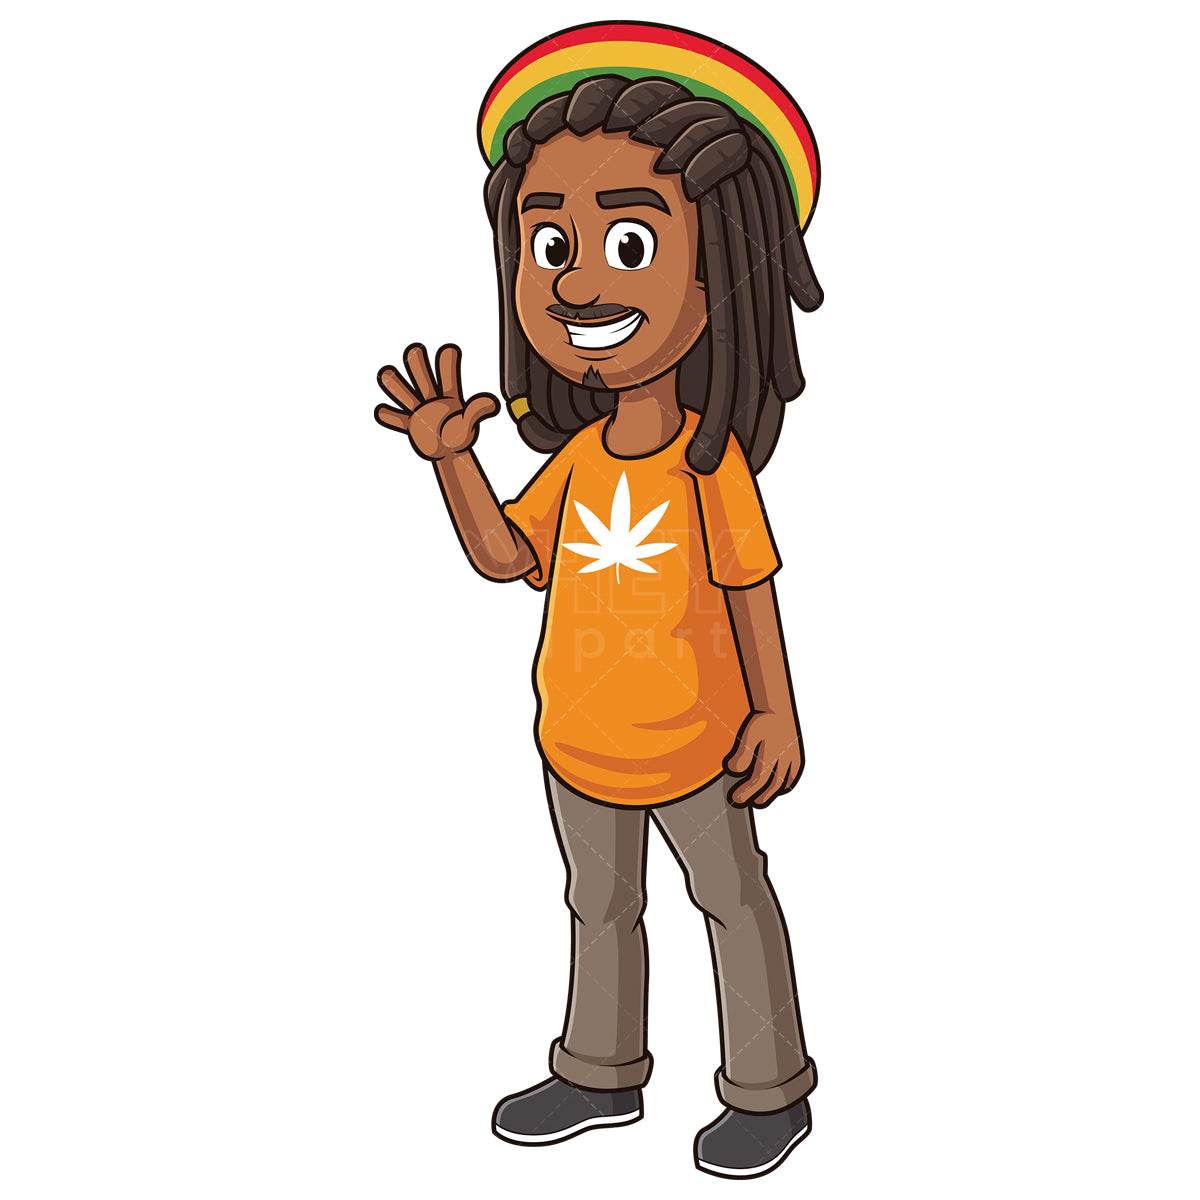 Royalty-free stock vector illustration of a rastafari jamaican man.